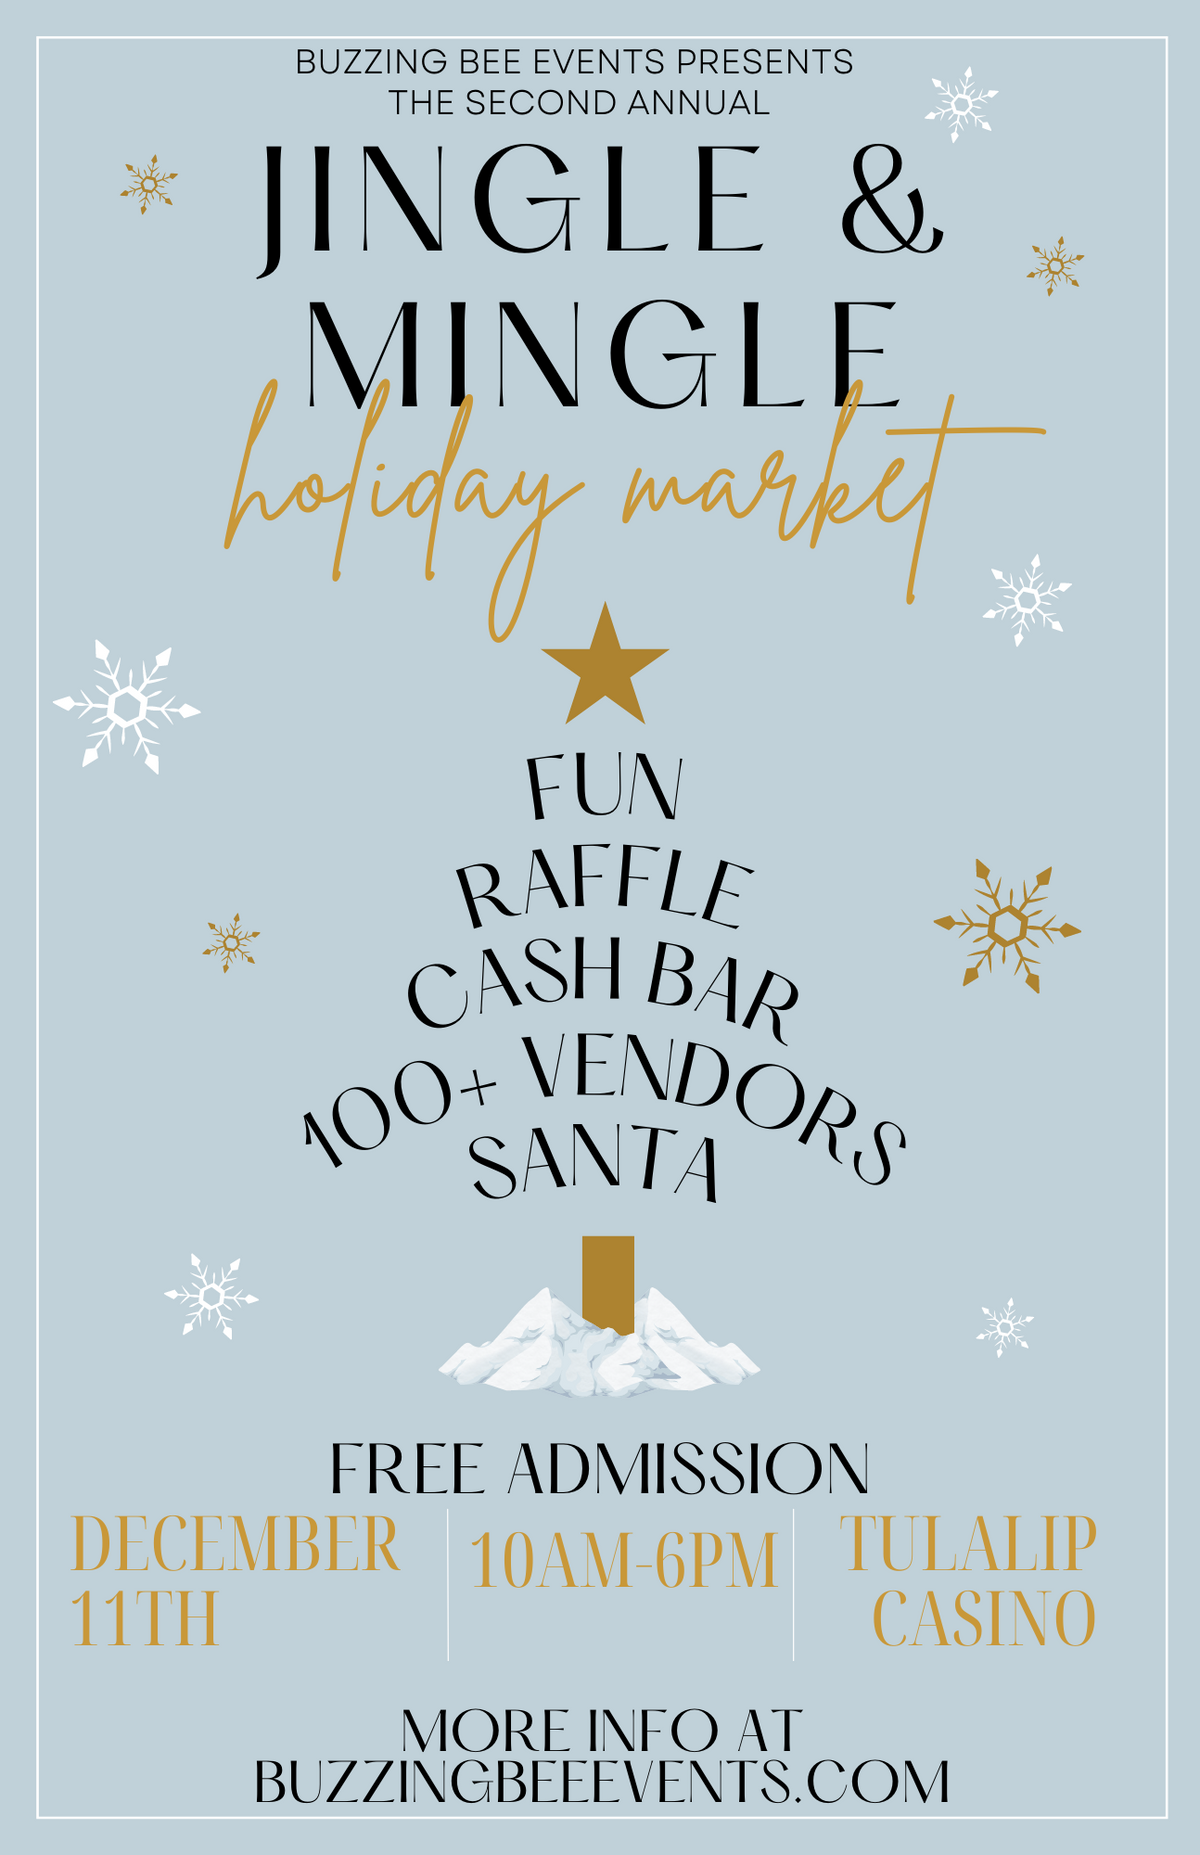 Jingle & Mingle Holiday Market at Tulalip Resort Casino in Tulalip, WA